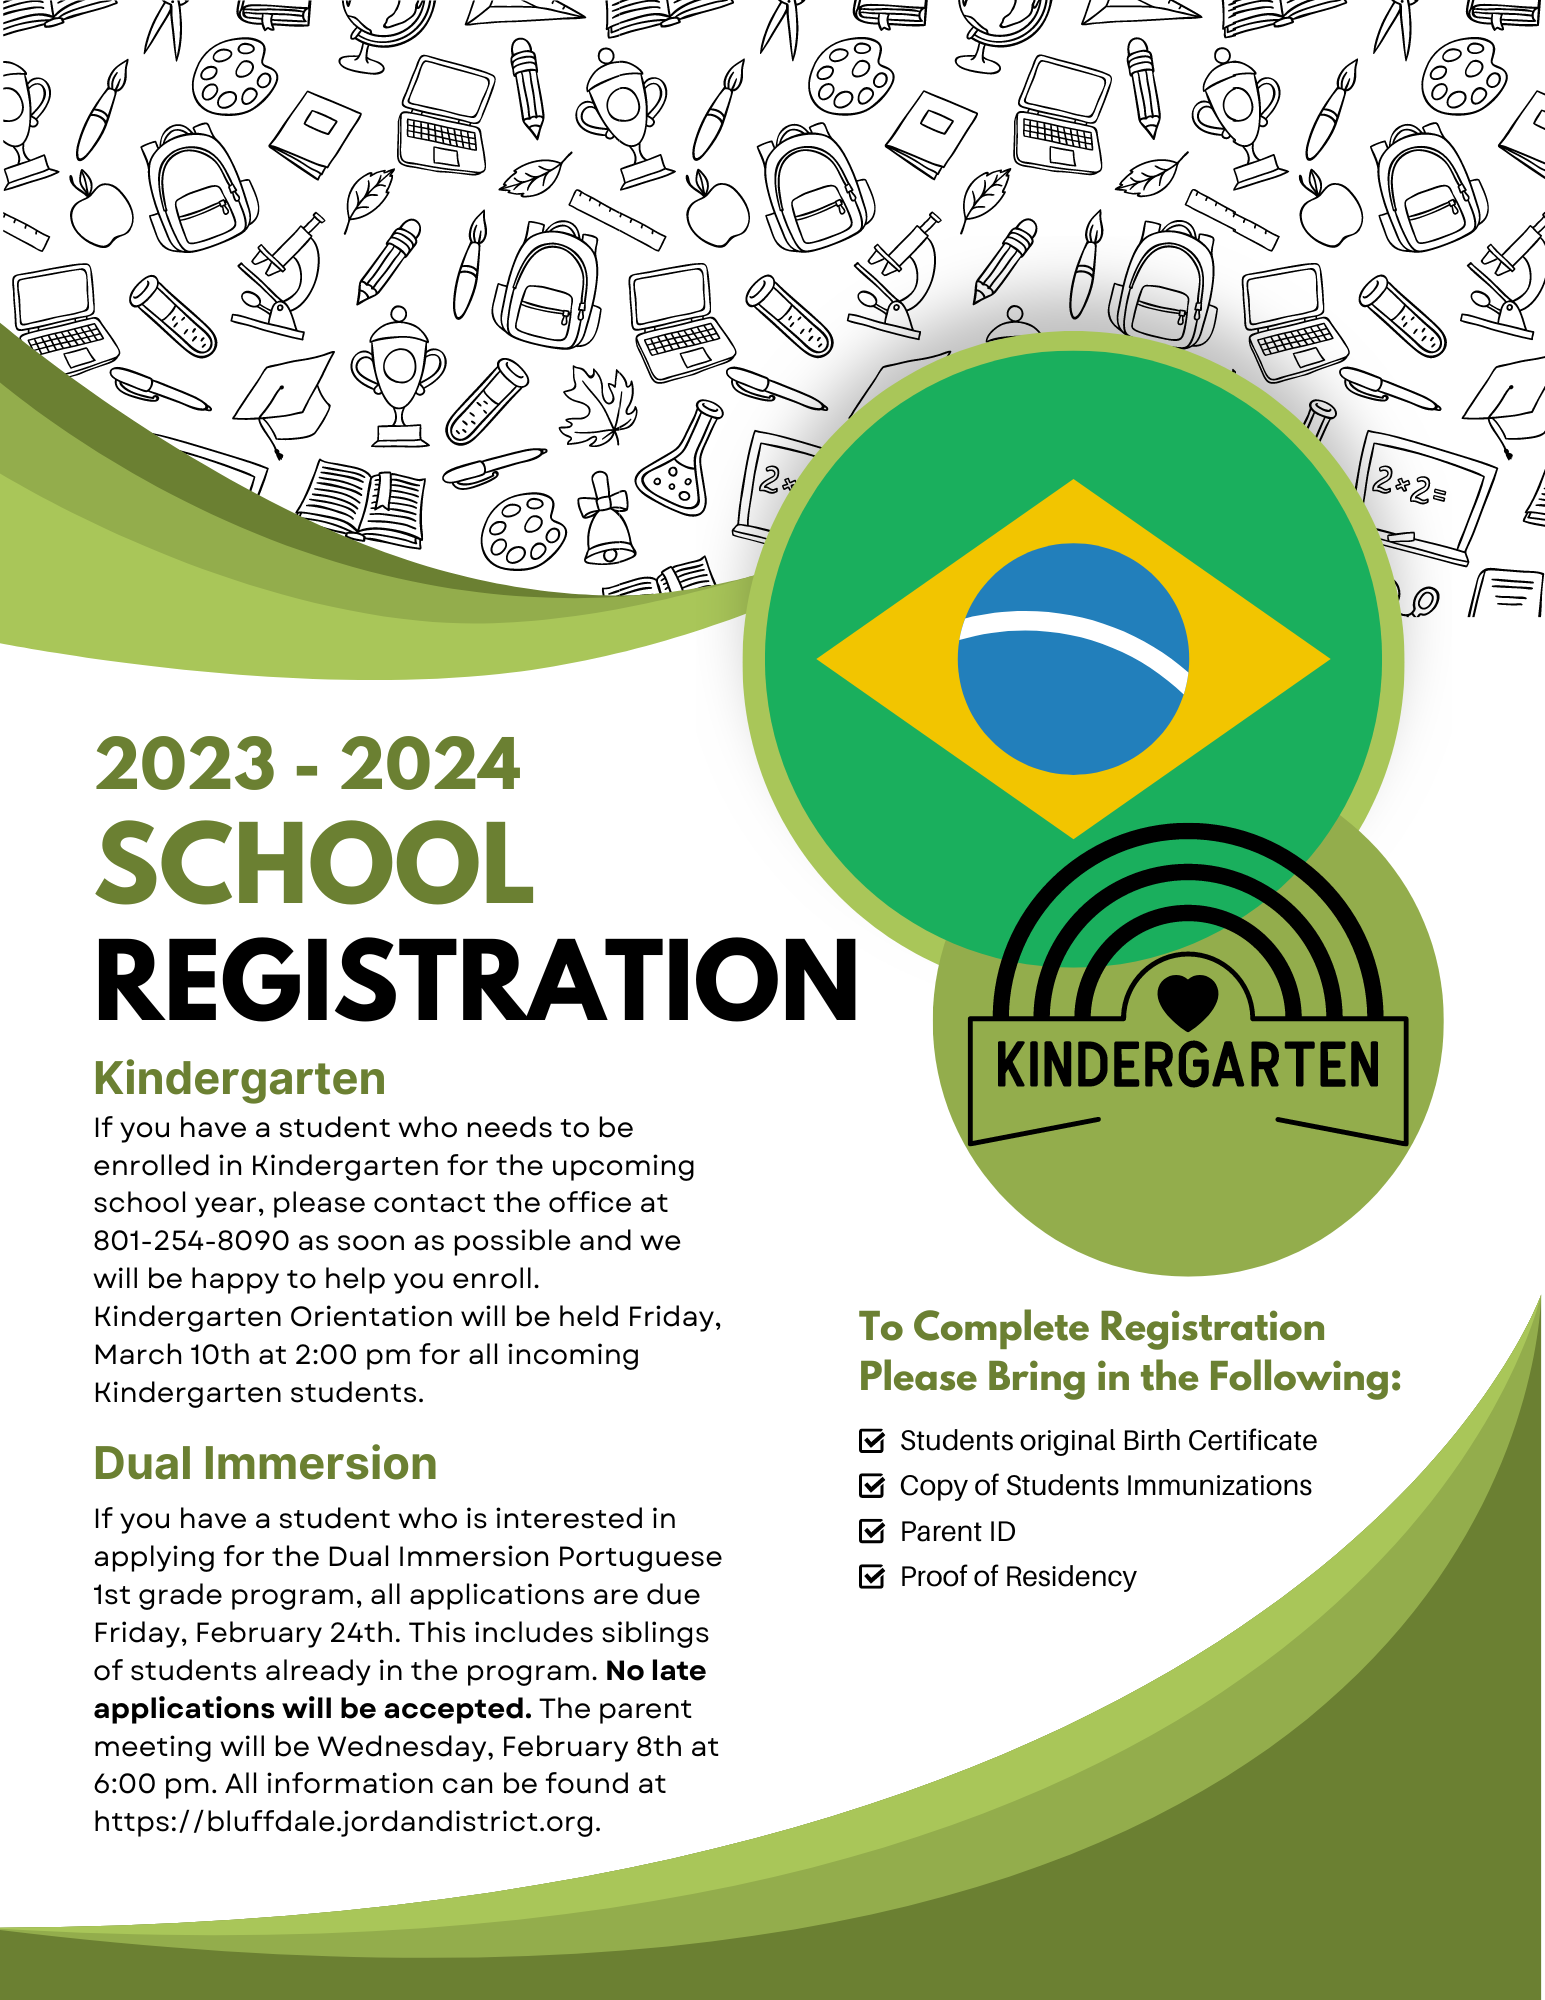 2023-2024 School Registration